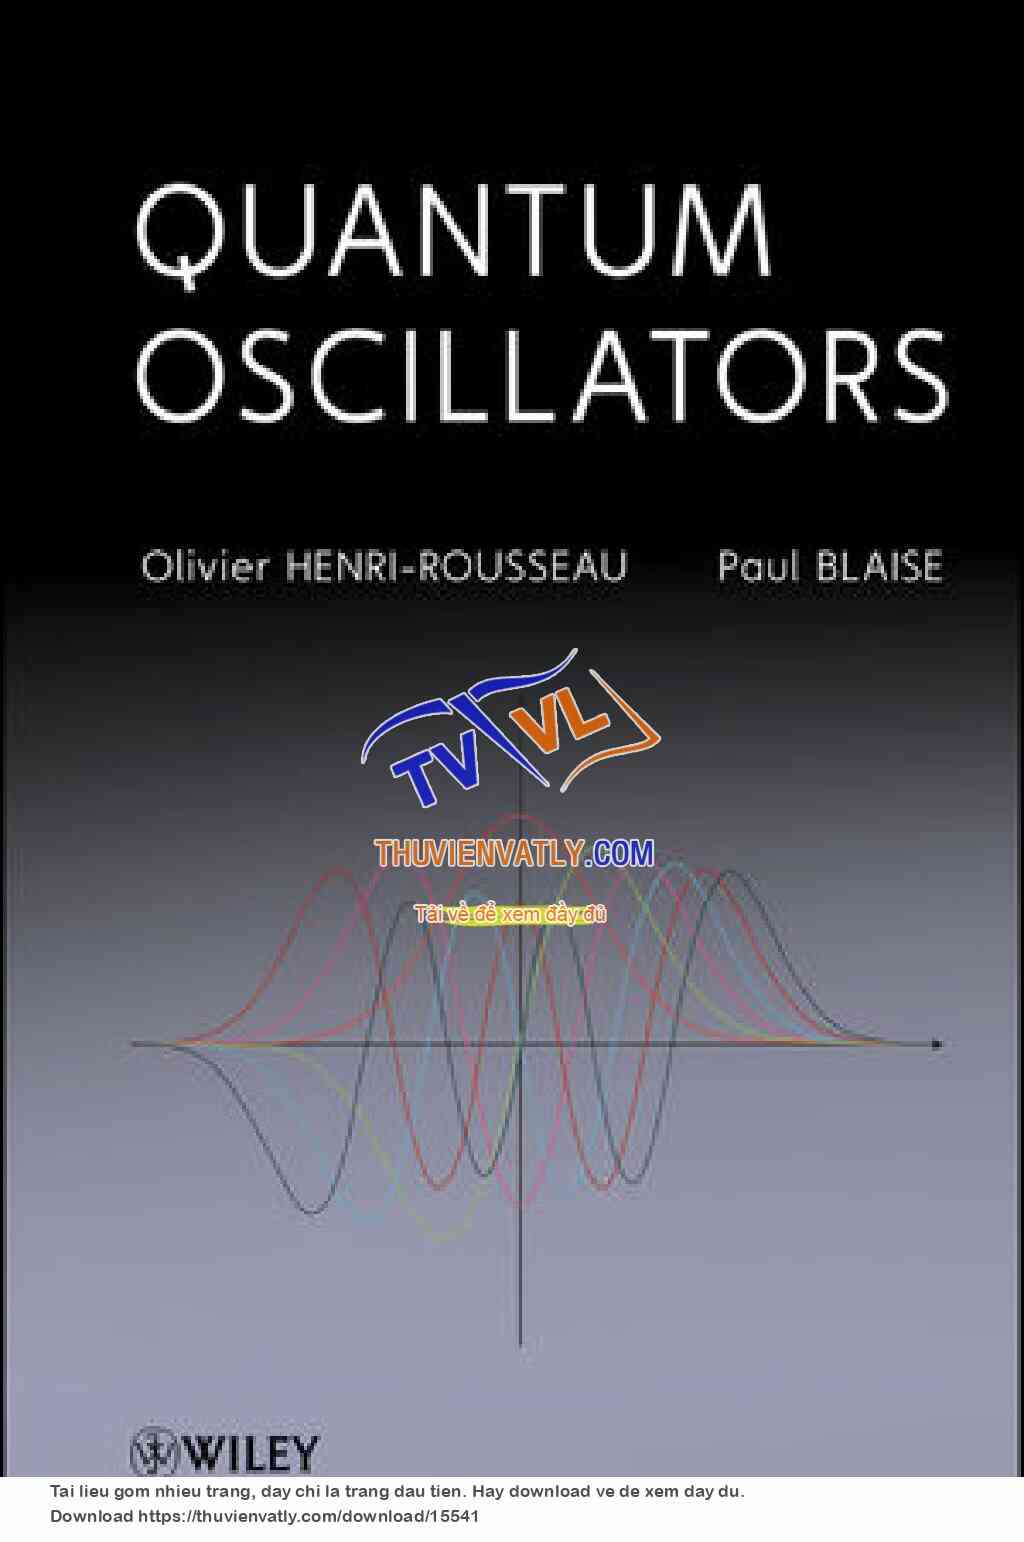 Quantum Oscillators - O. Henri-Rousseau, et. al., (Wiley, 2011)